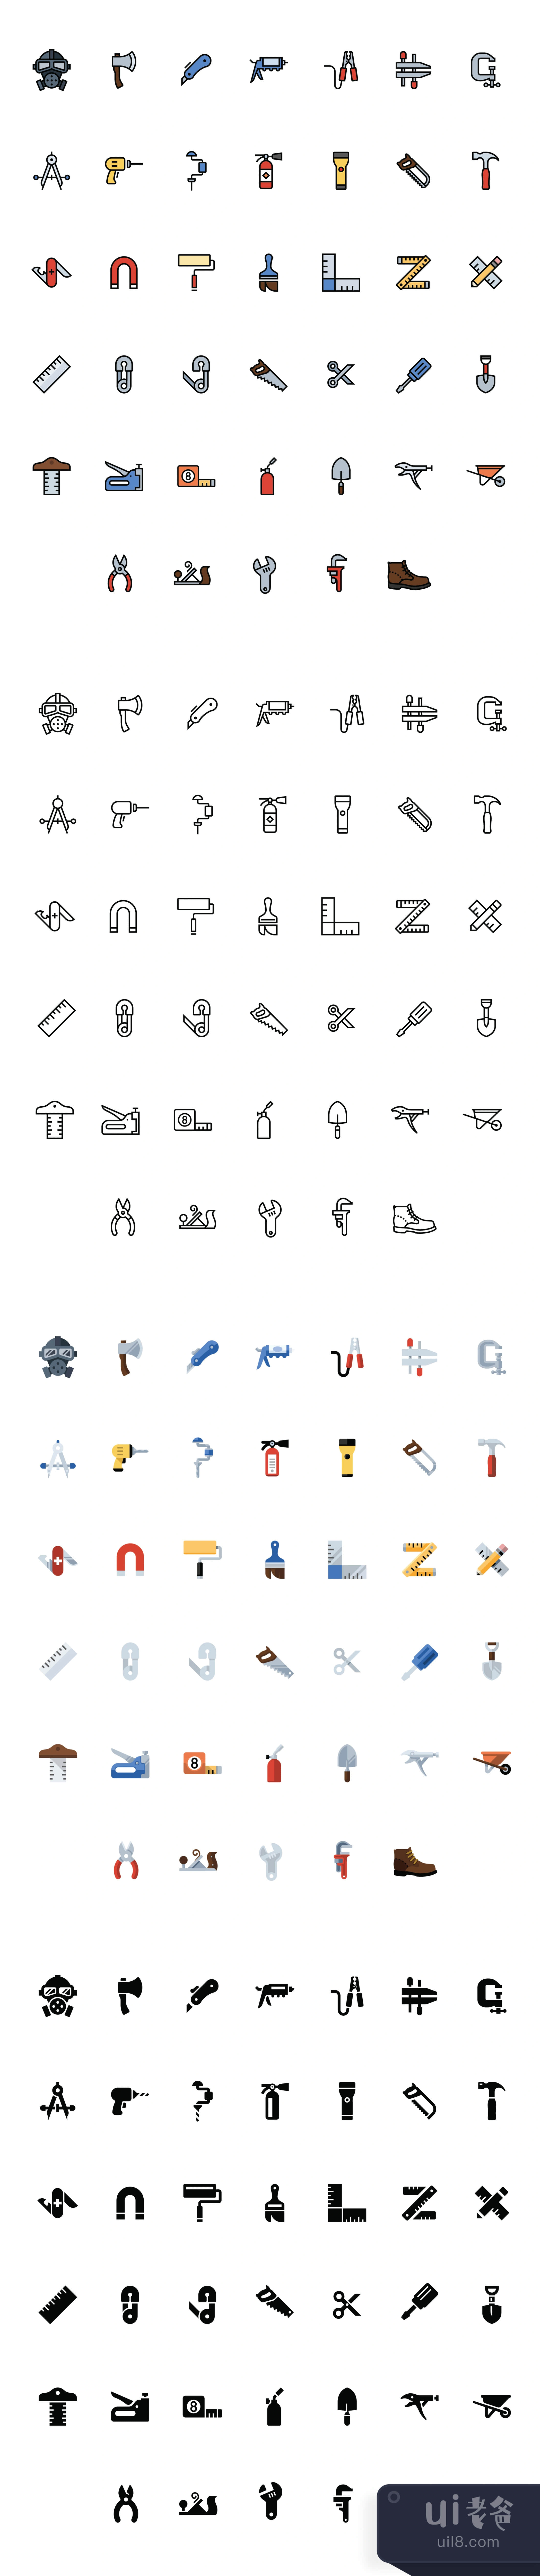 160个工具图标 (160 Tools Icons)插图1